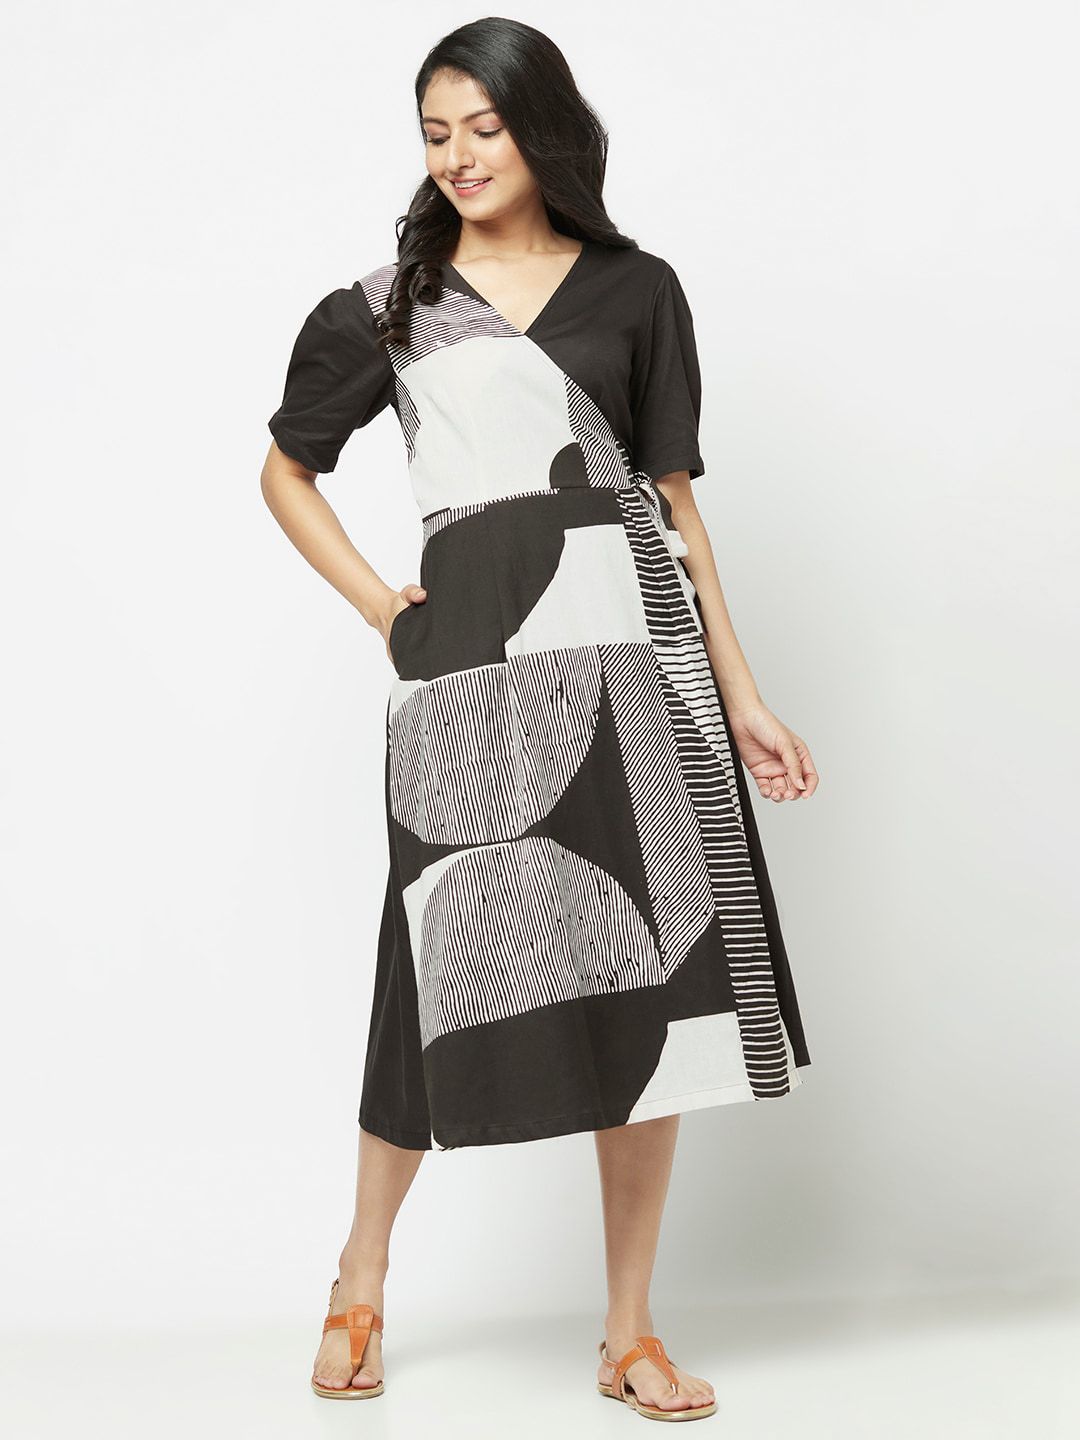 Fabindia Black & Grey Midi Dress Price in India